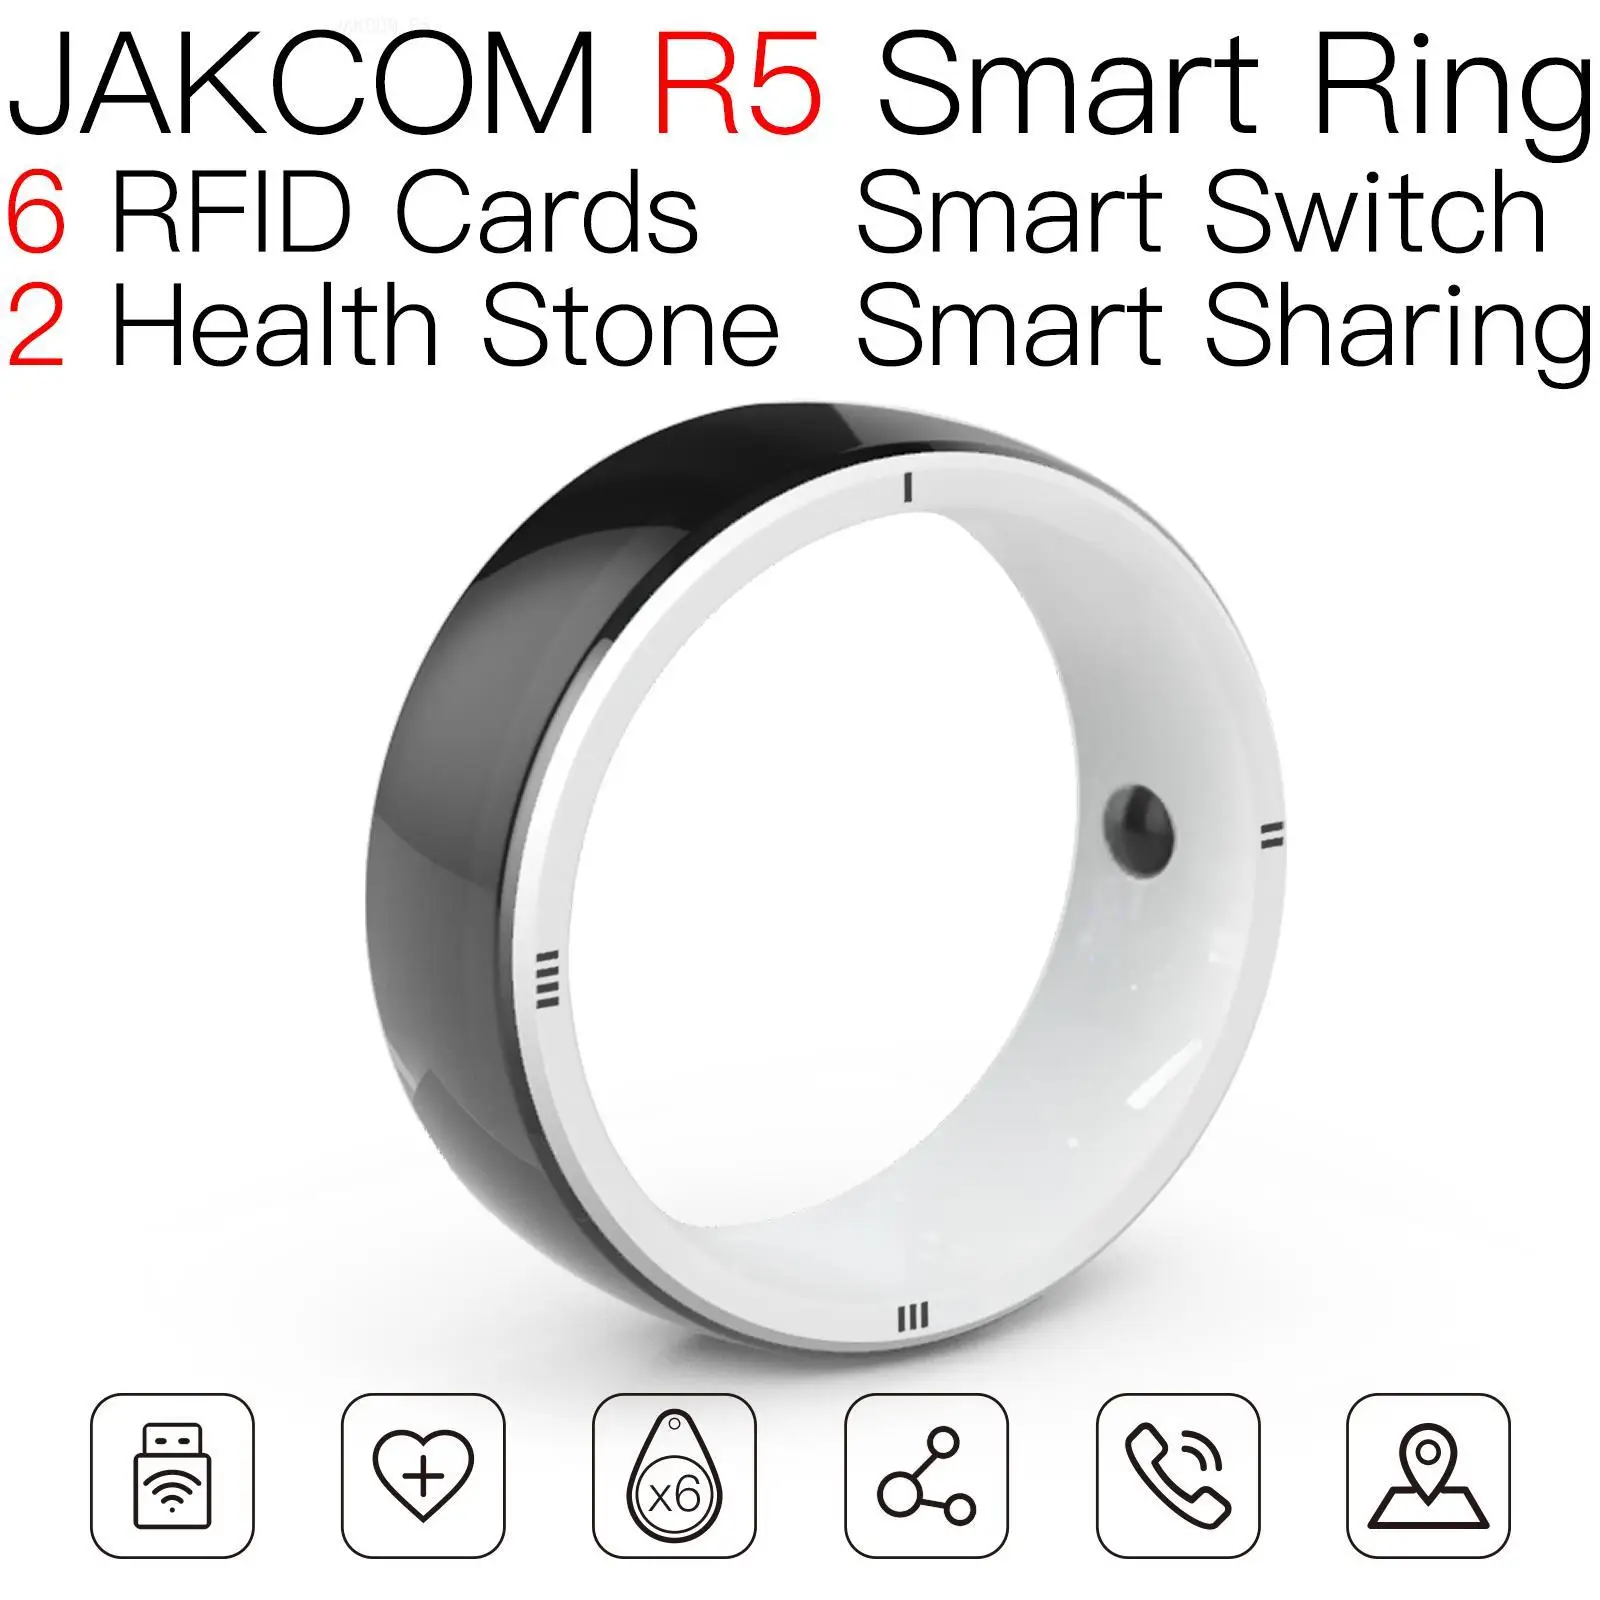 

JAKCOM R5 Smart Ring Super value as rfid big transparent write key rings nfc 125khz rewritable bracelet eas tag uhf read u2f